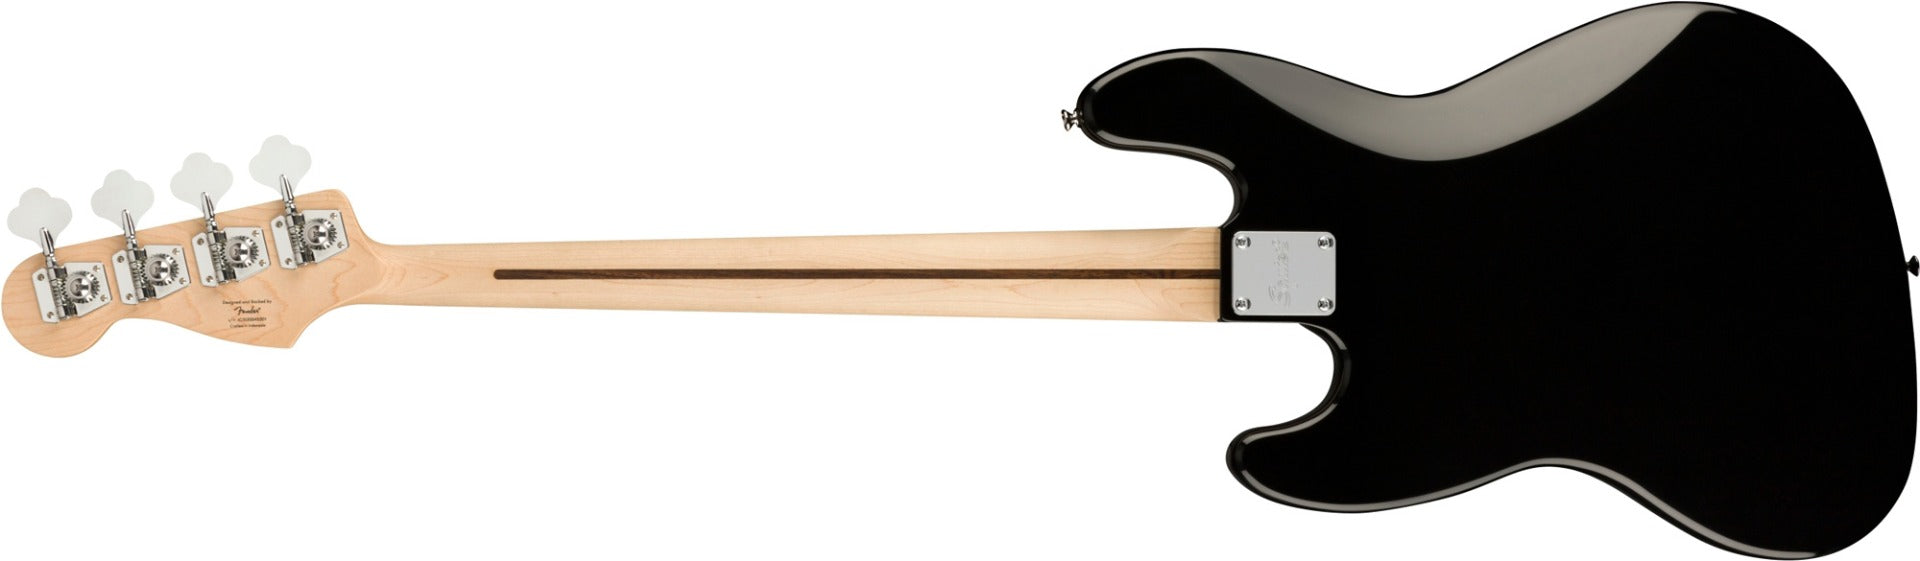 Squier Affinity Jazz Bass - Maple, Black back